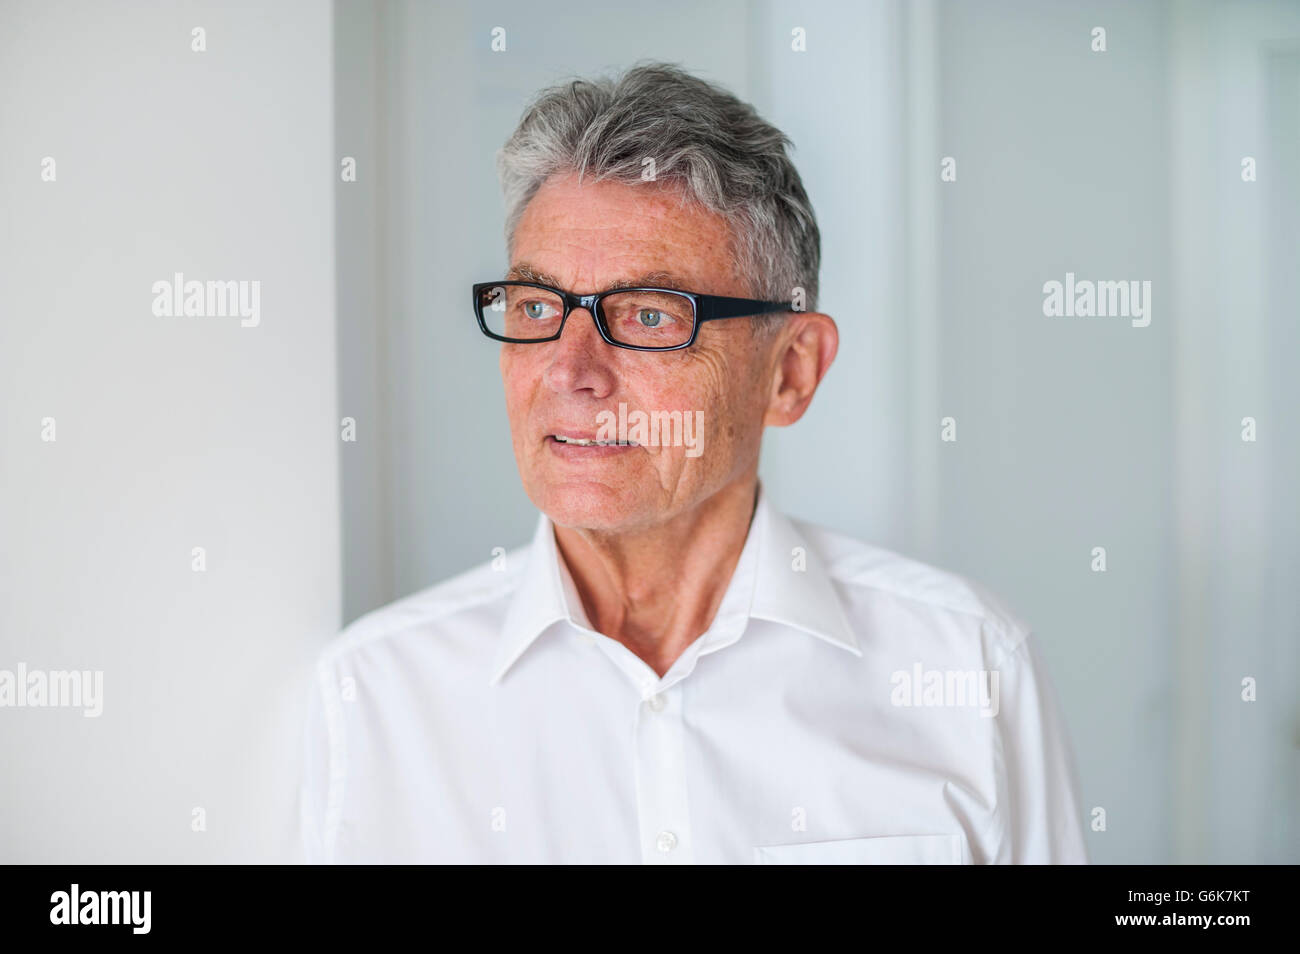 Senior man wearing glasses and white shirt Stock Photo